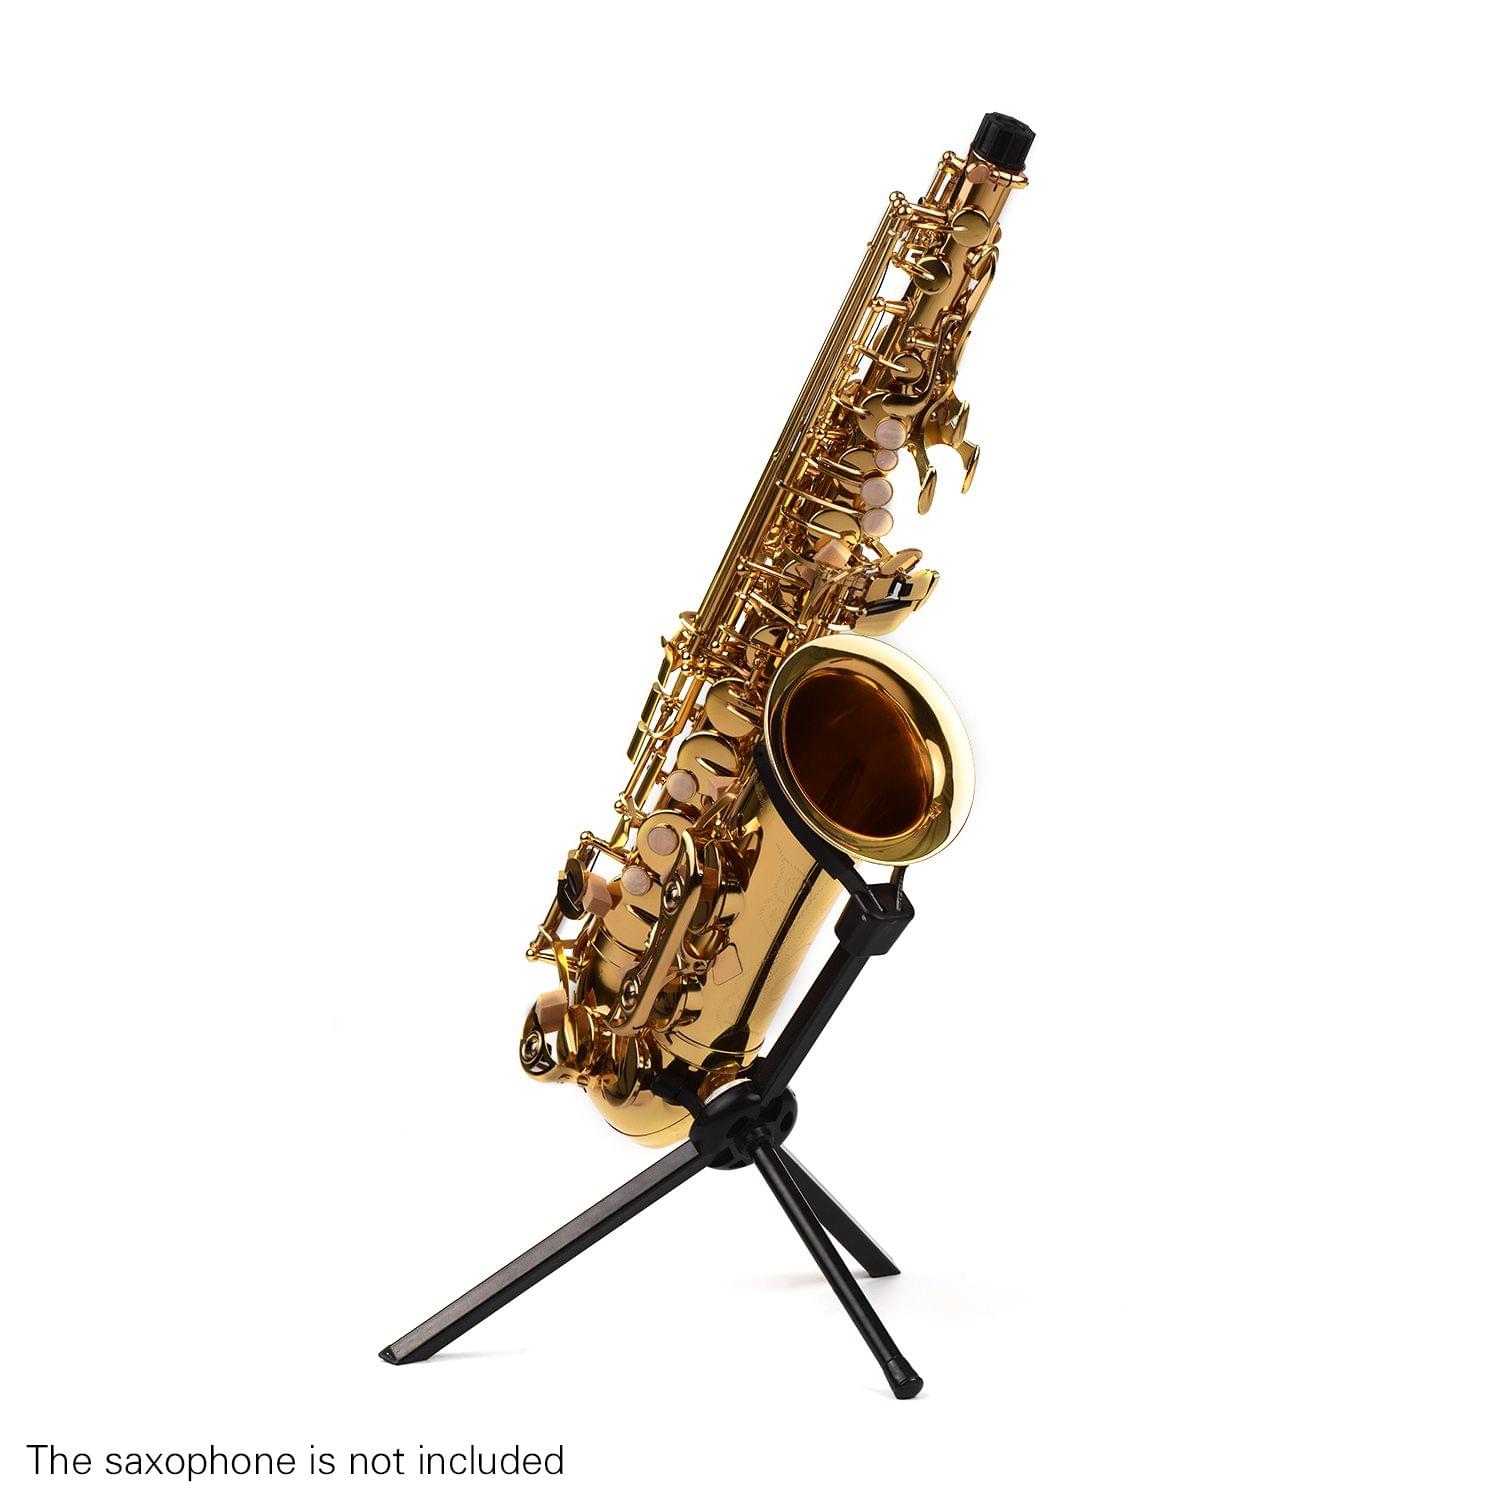 Portable Alto Saxophone Stand Sax Floor Stand Holder - for alto sax